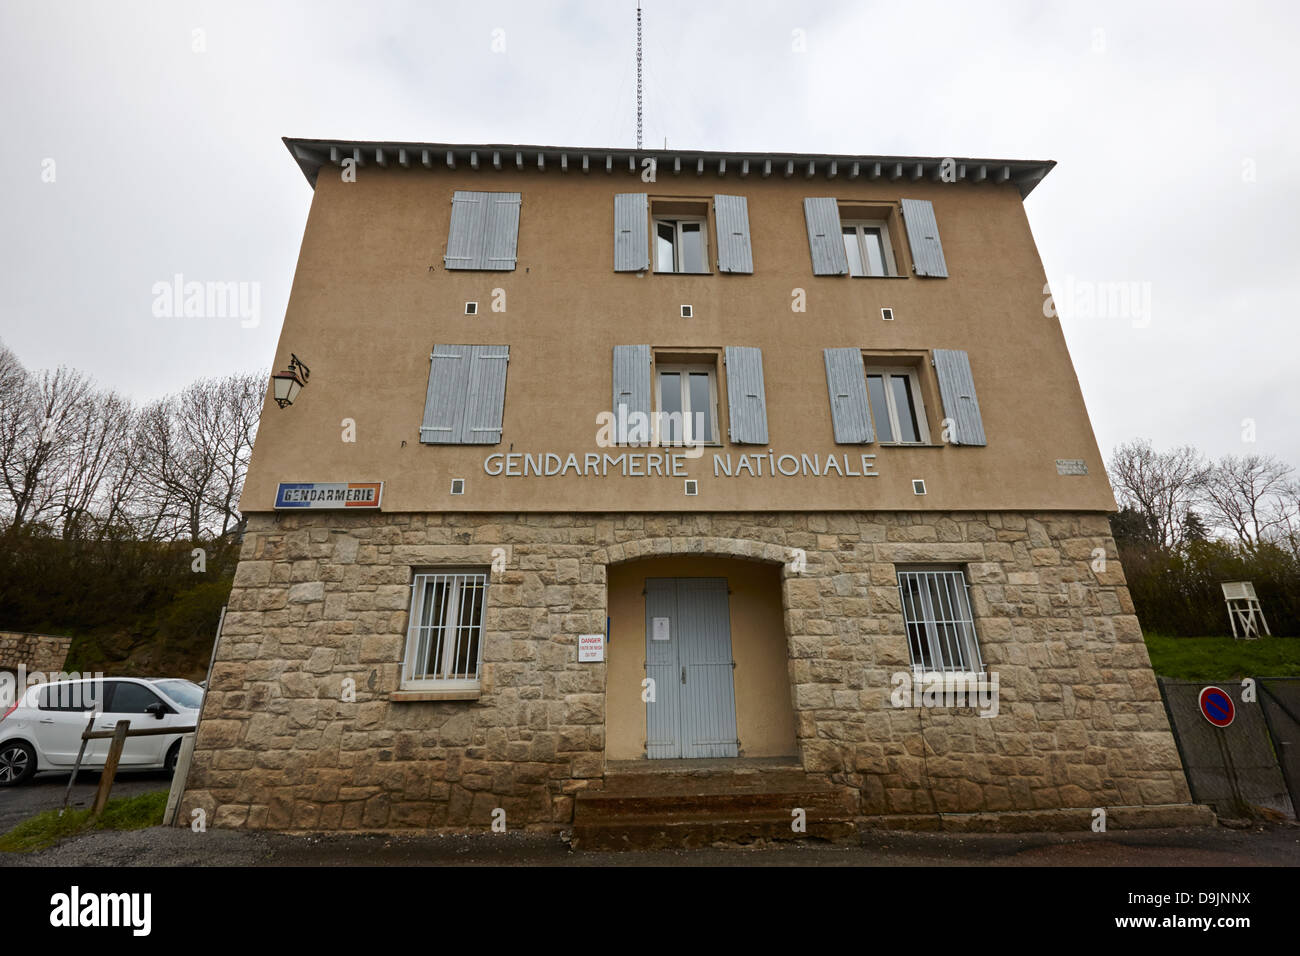 Gendarmerie nationale stazione di polizia mont-louis pyrenees-orientales francia Foto Stock